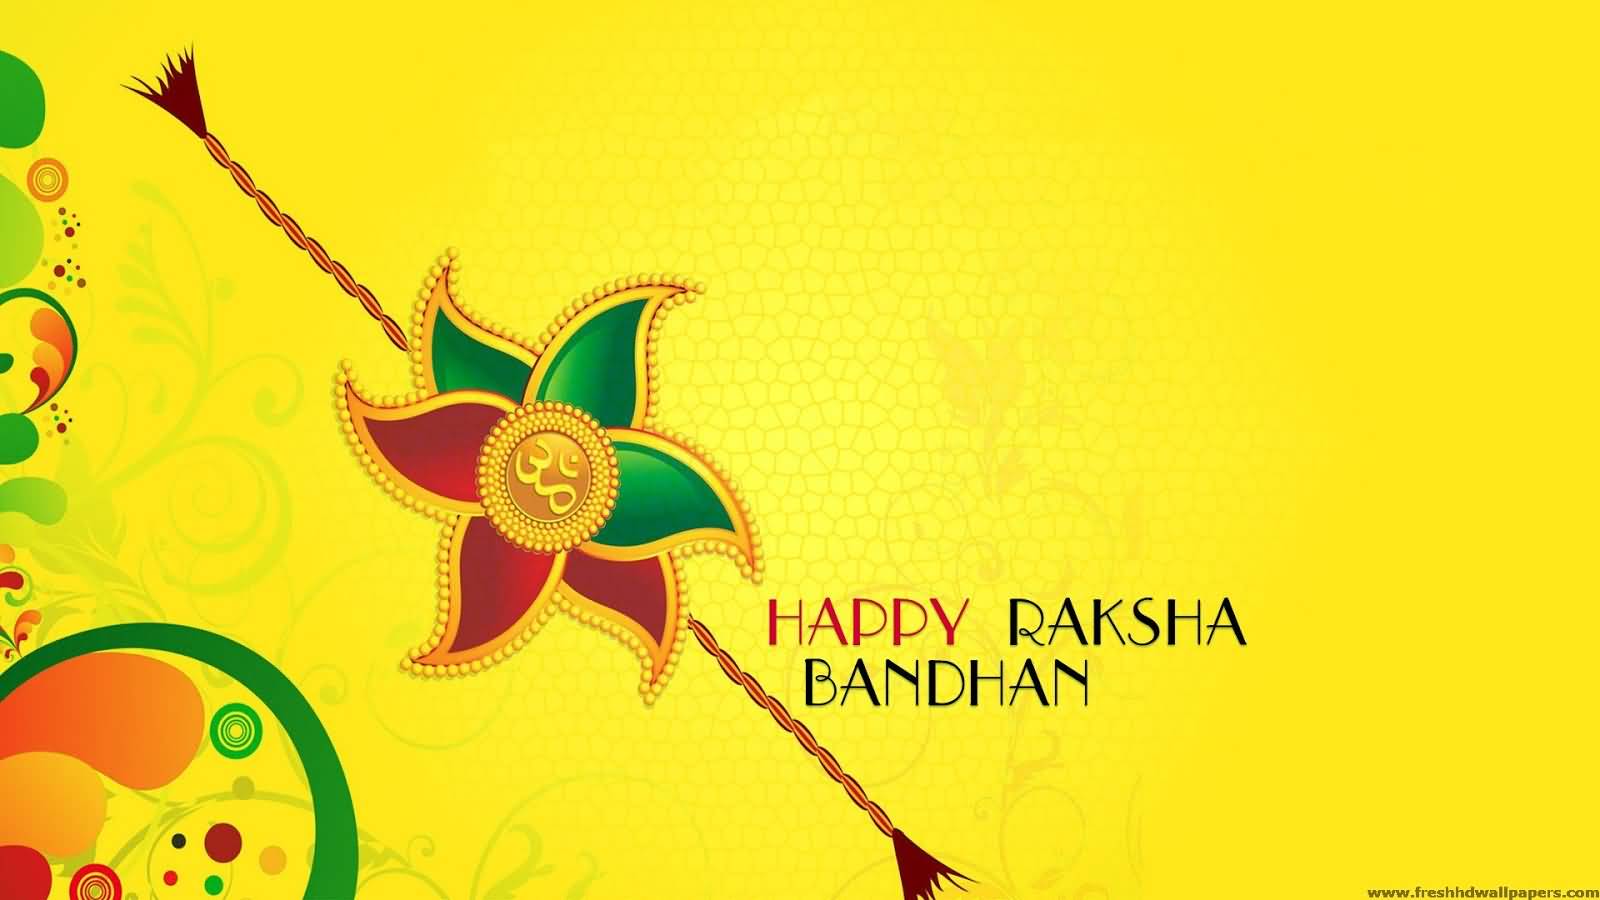 Happy Rakshan Bandhan The Thread Of Love